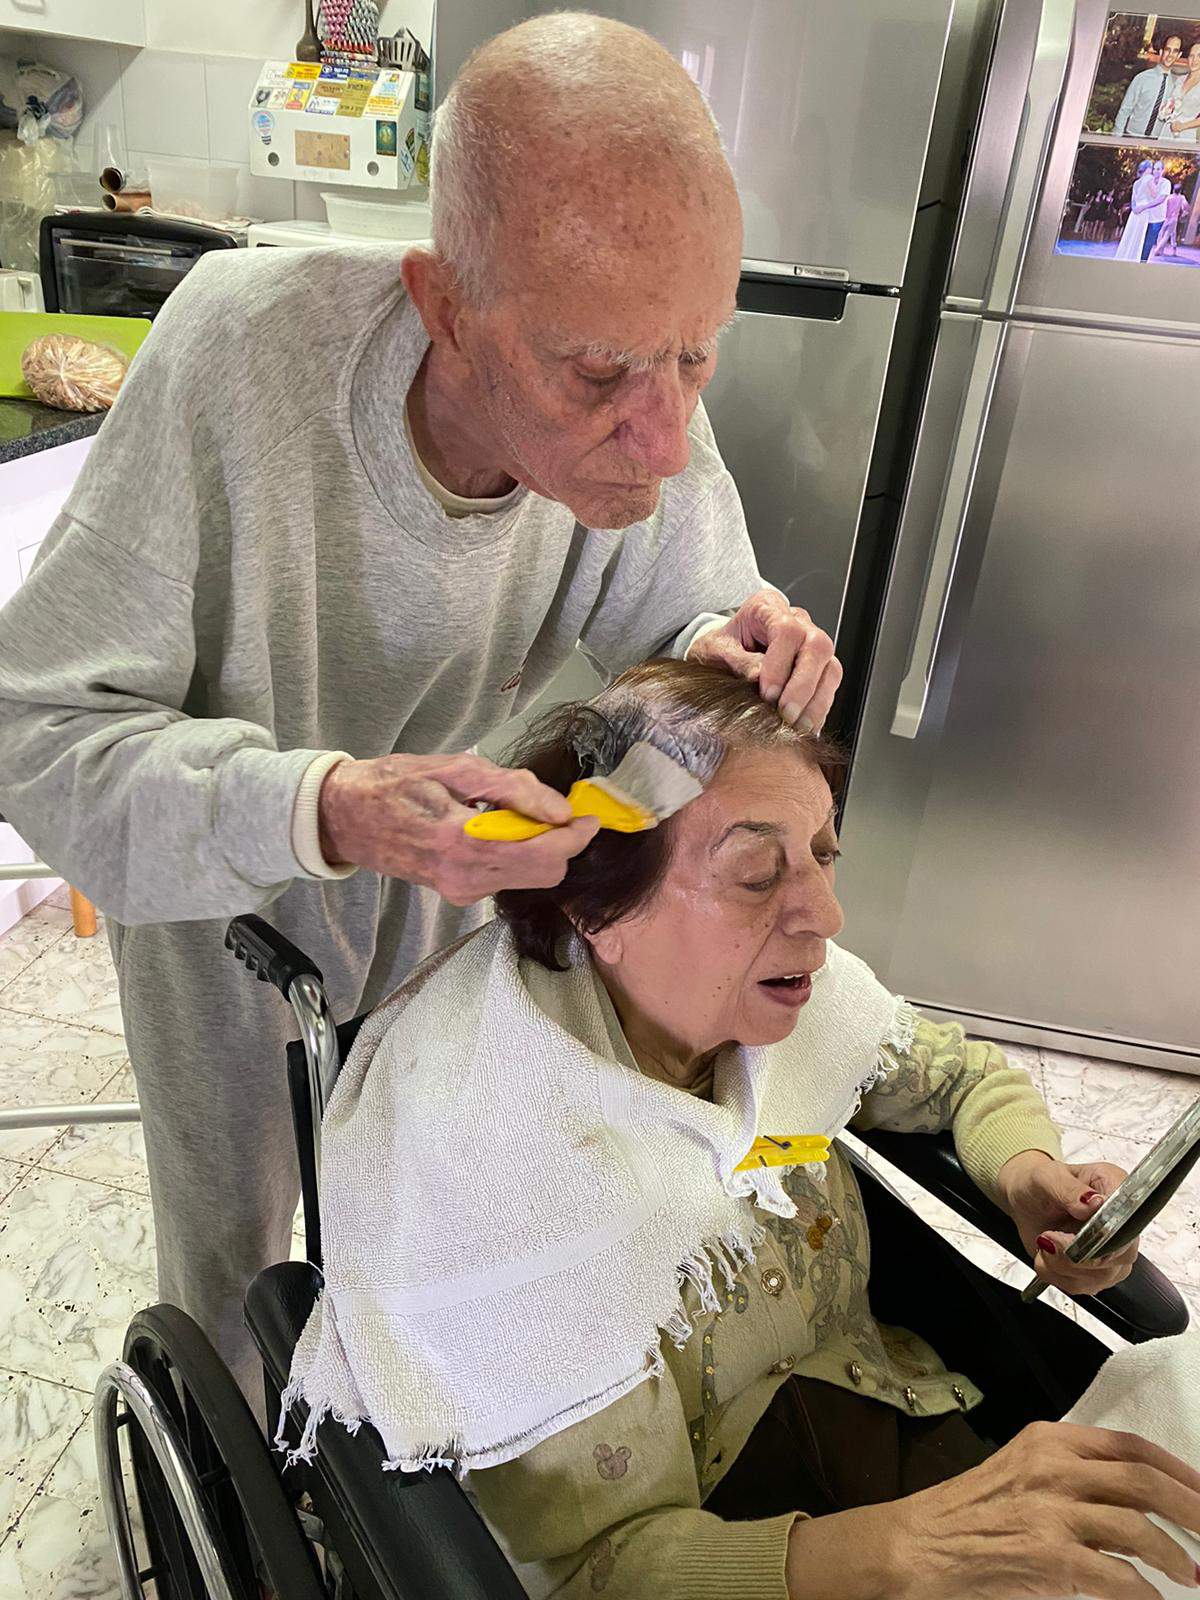 92-year-old man helps wife dye her hair so she feels ‘well-groomed’